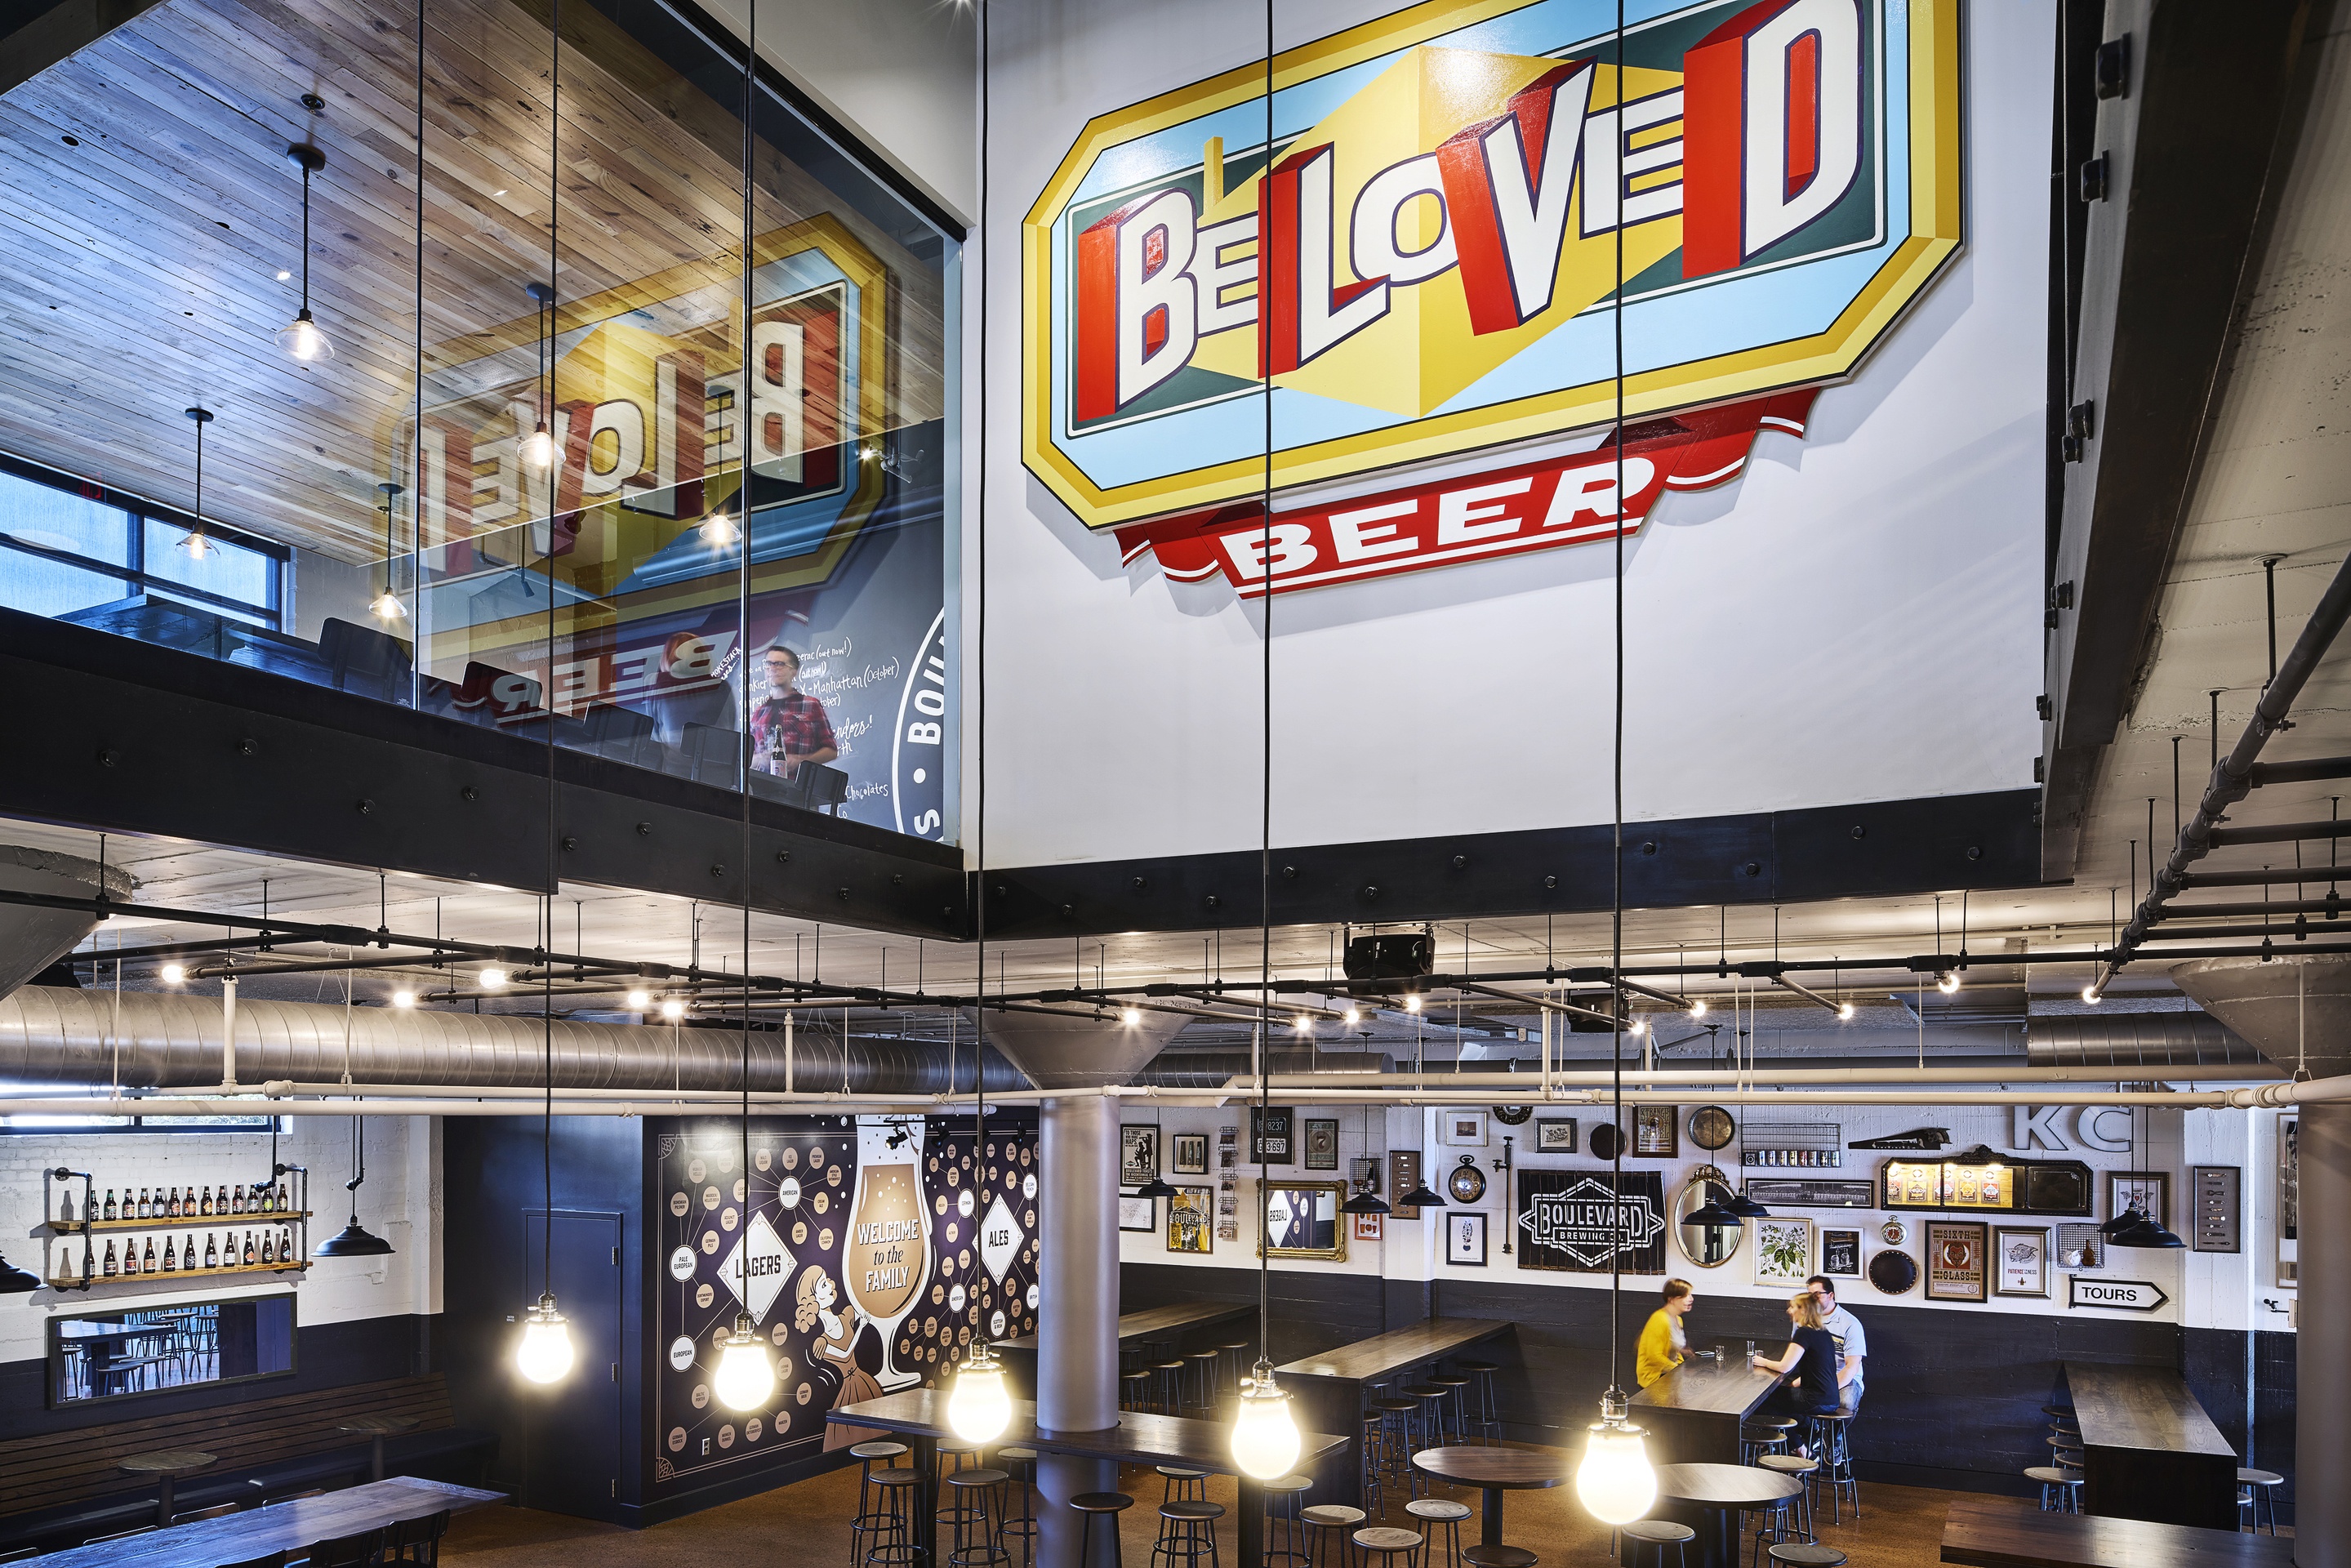 boulevard brewing tours & recreation center reviews